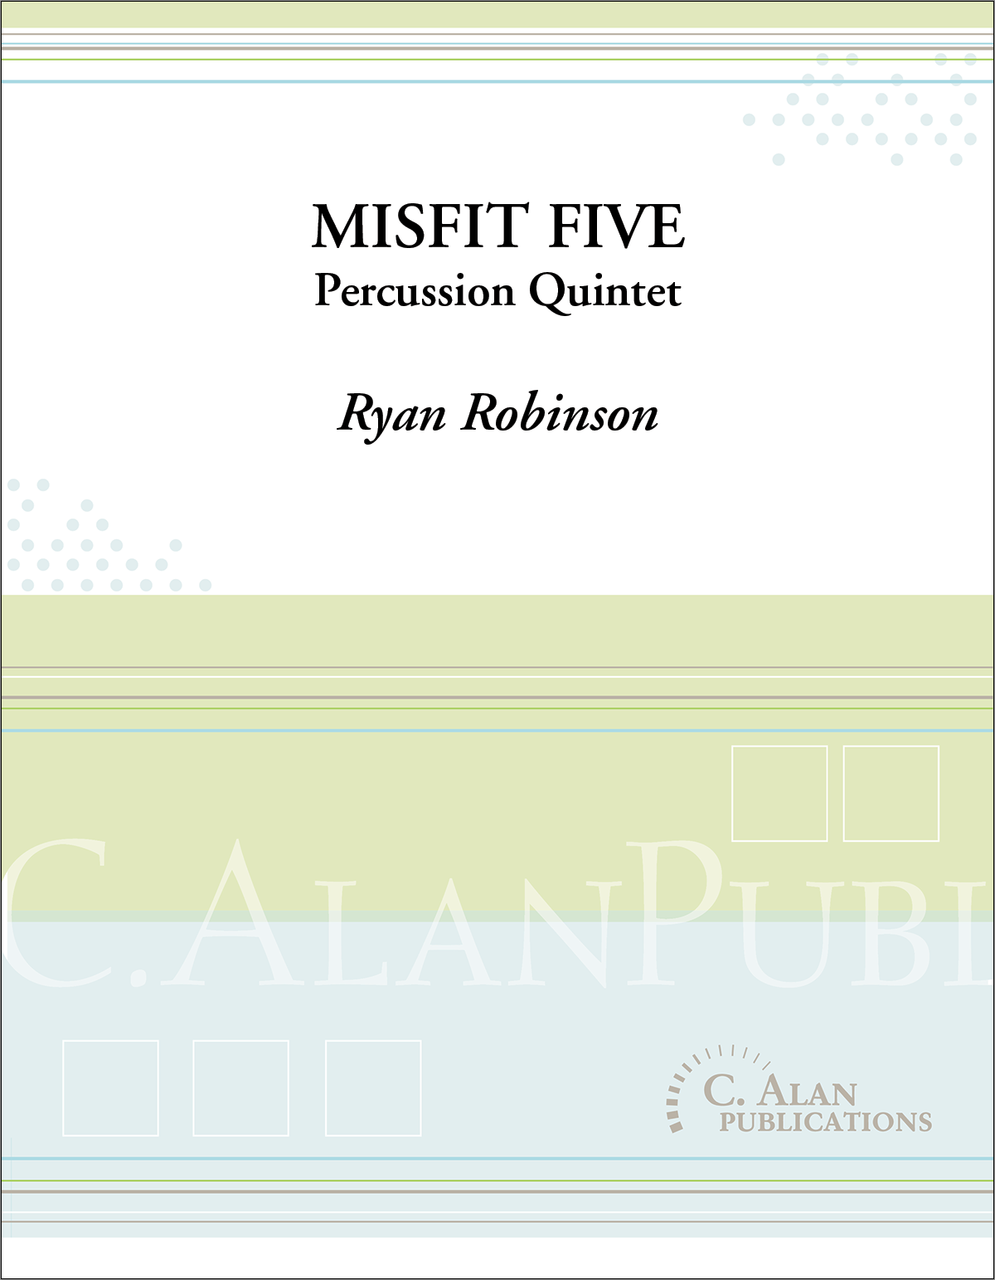 Misfit Five by Ryan Robinson